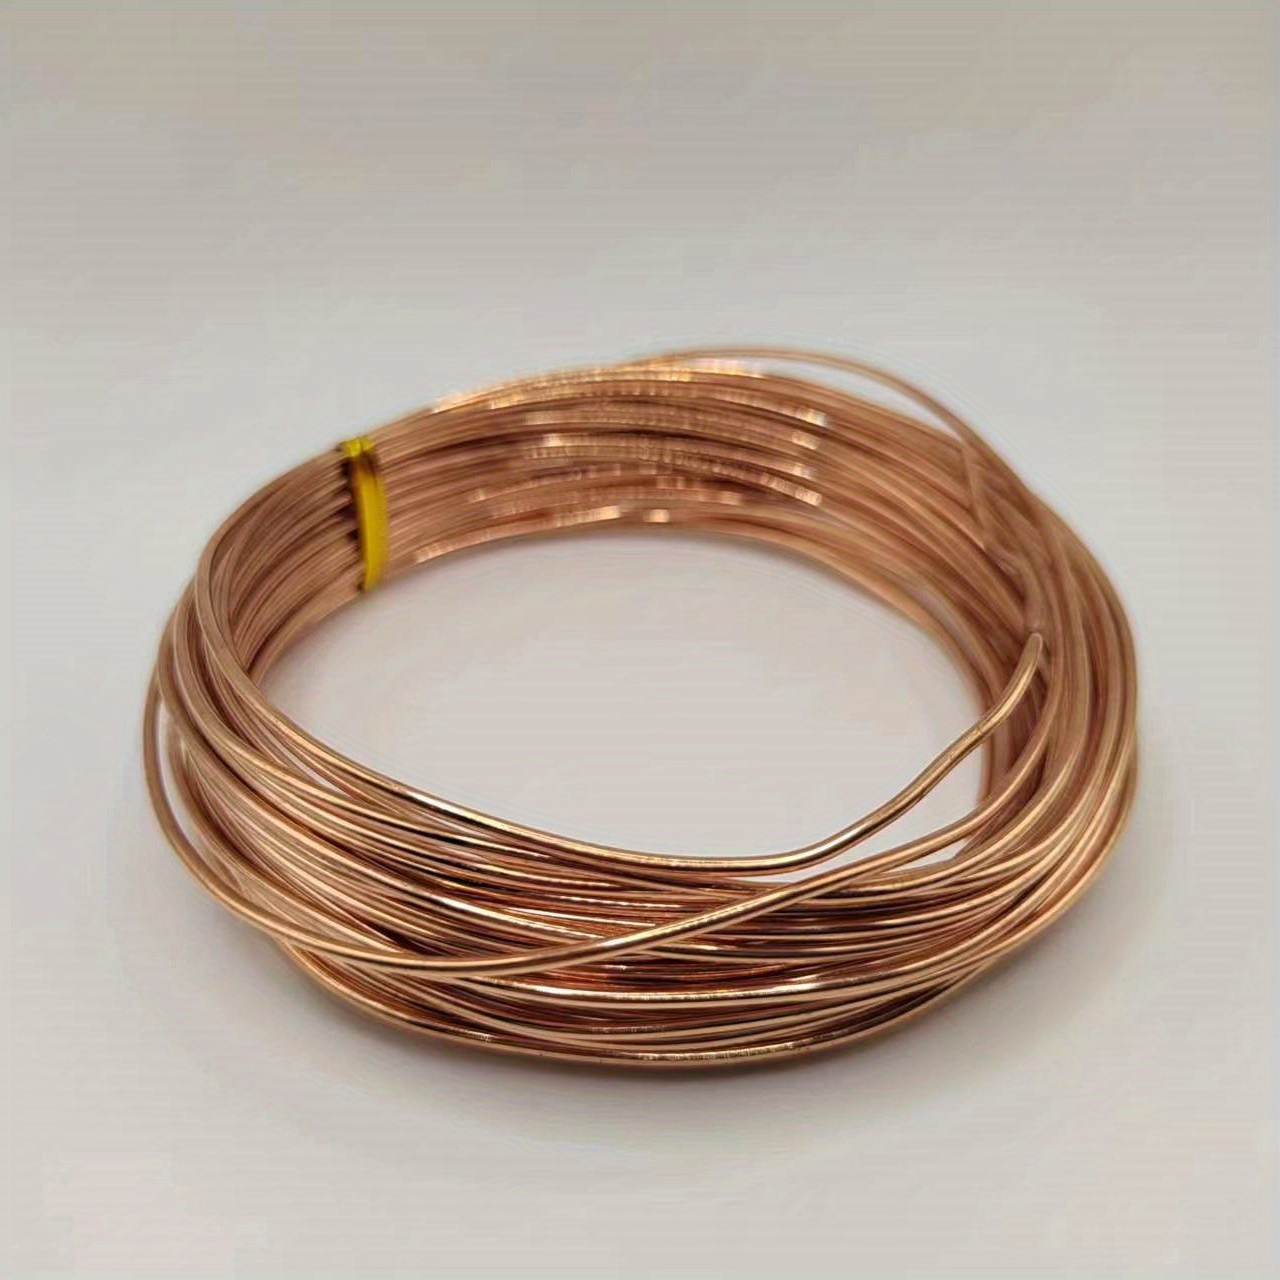 BENECREAT 18 Gauge Bare Copper Wire Solid Copper Wire for Jewelry